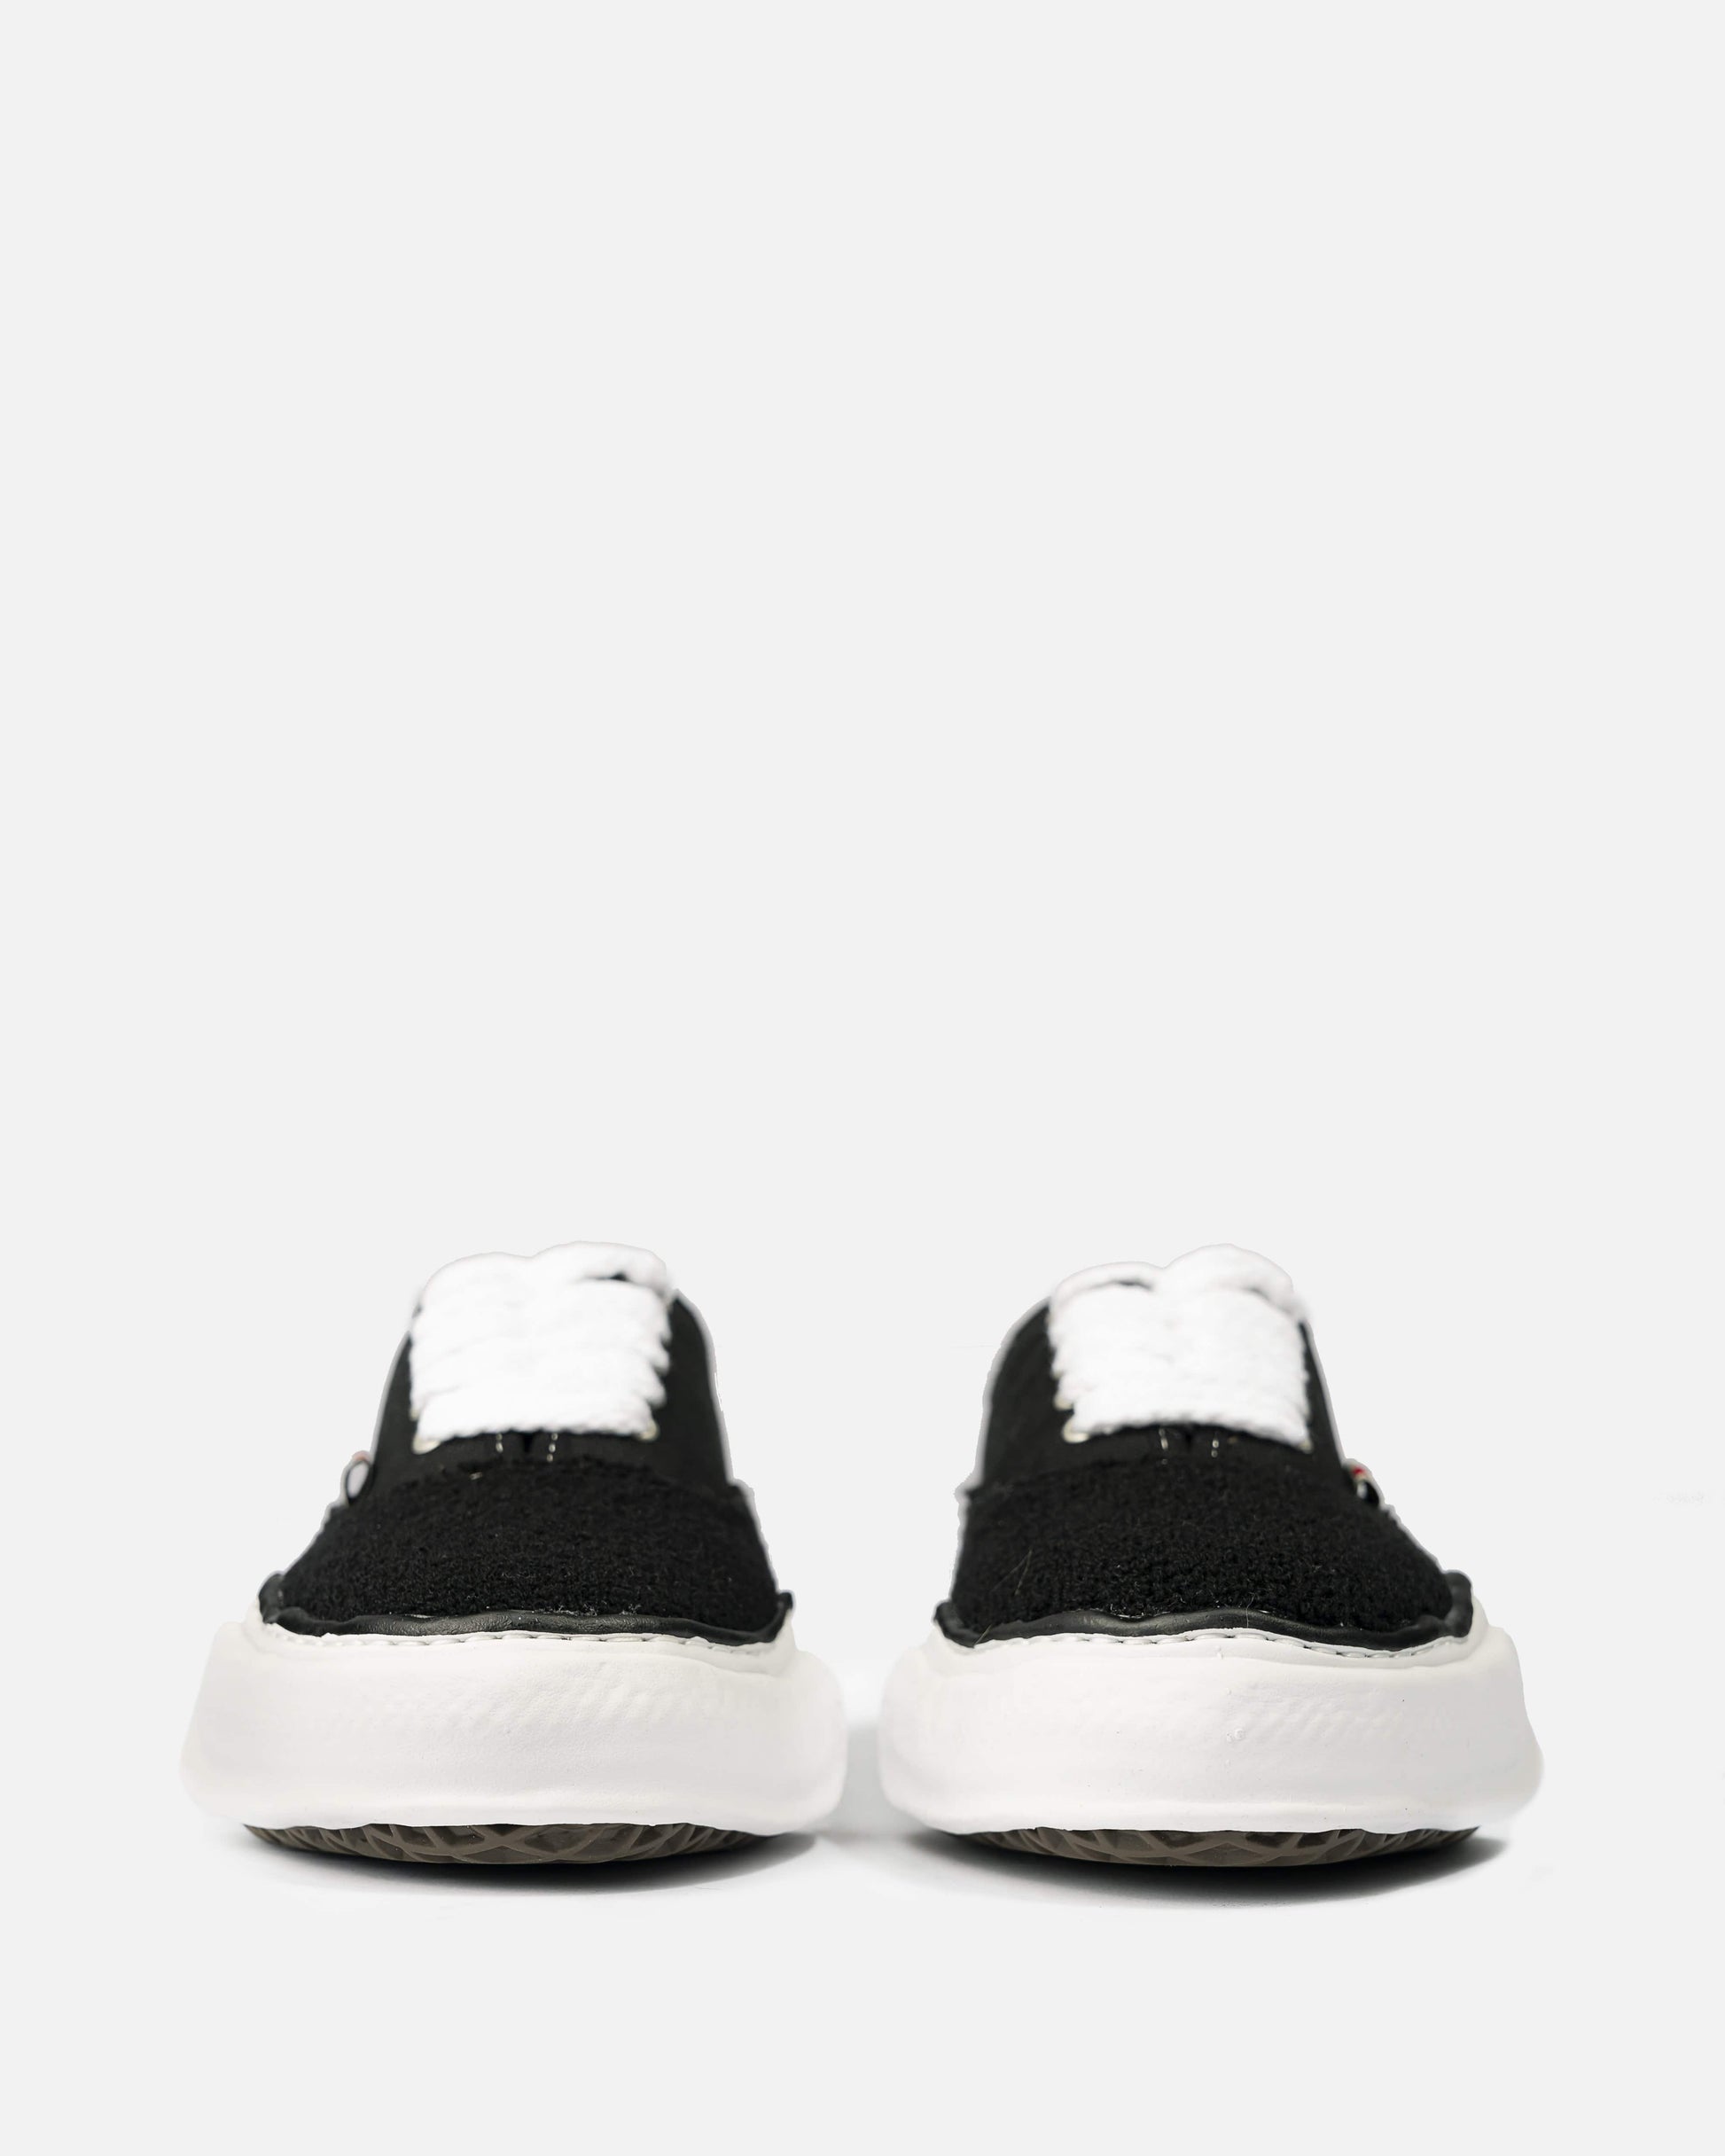 Maison Mihara Yasuhiro Men's Sneakers Baker Low in Black/White